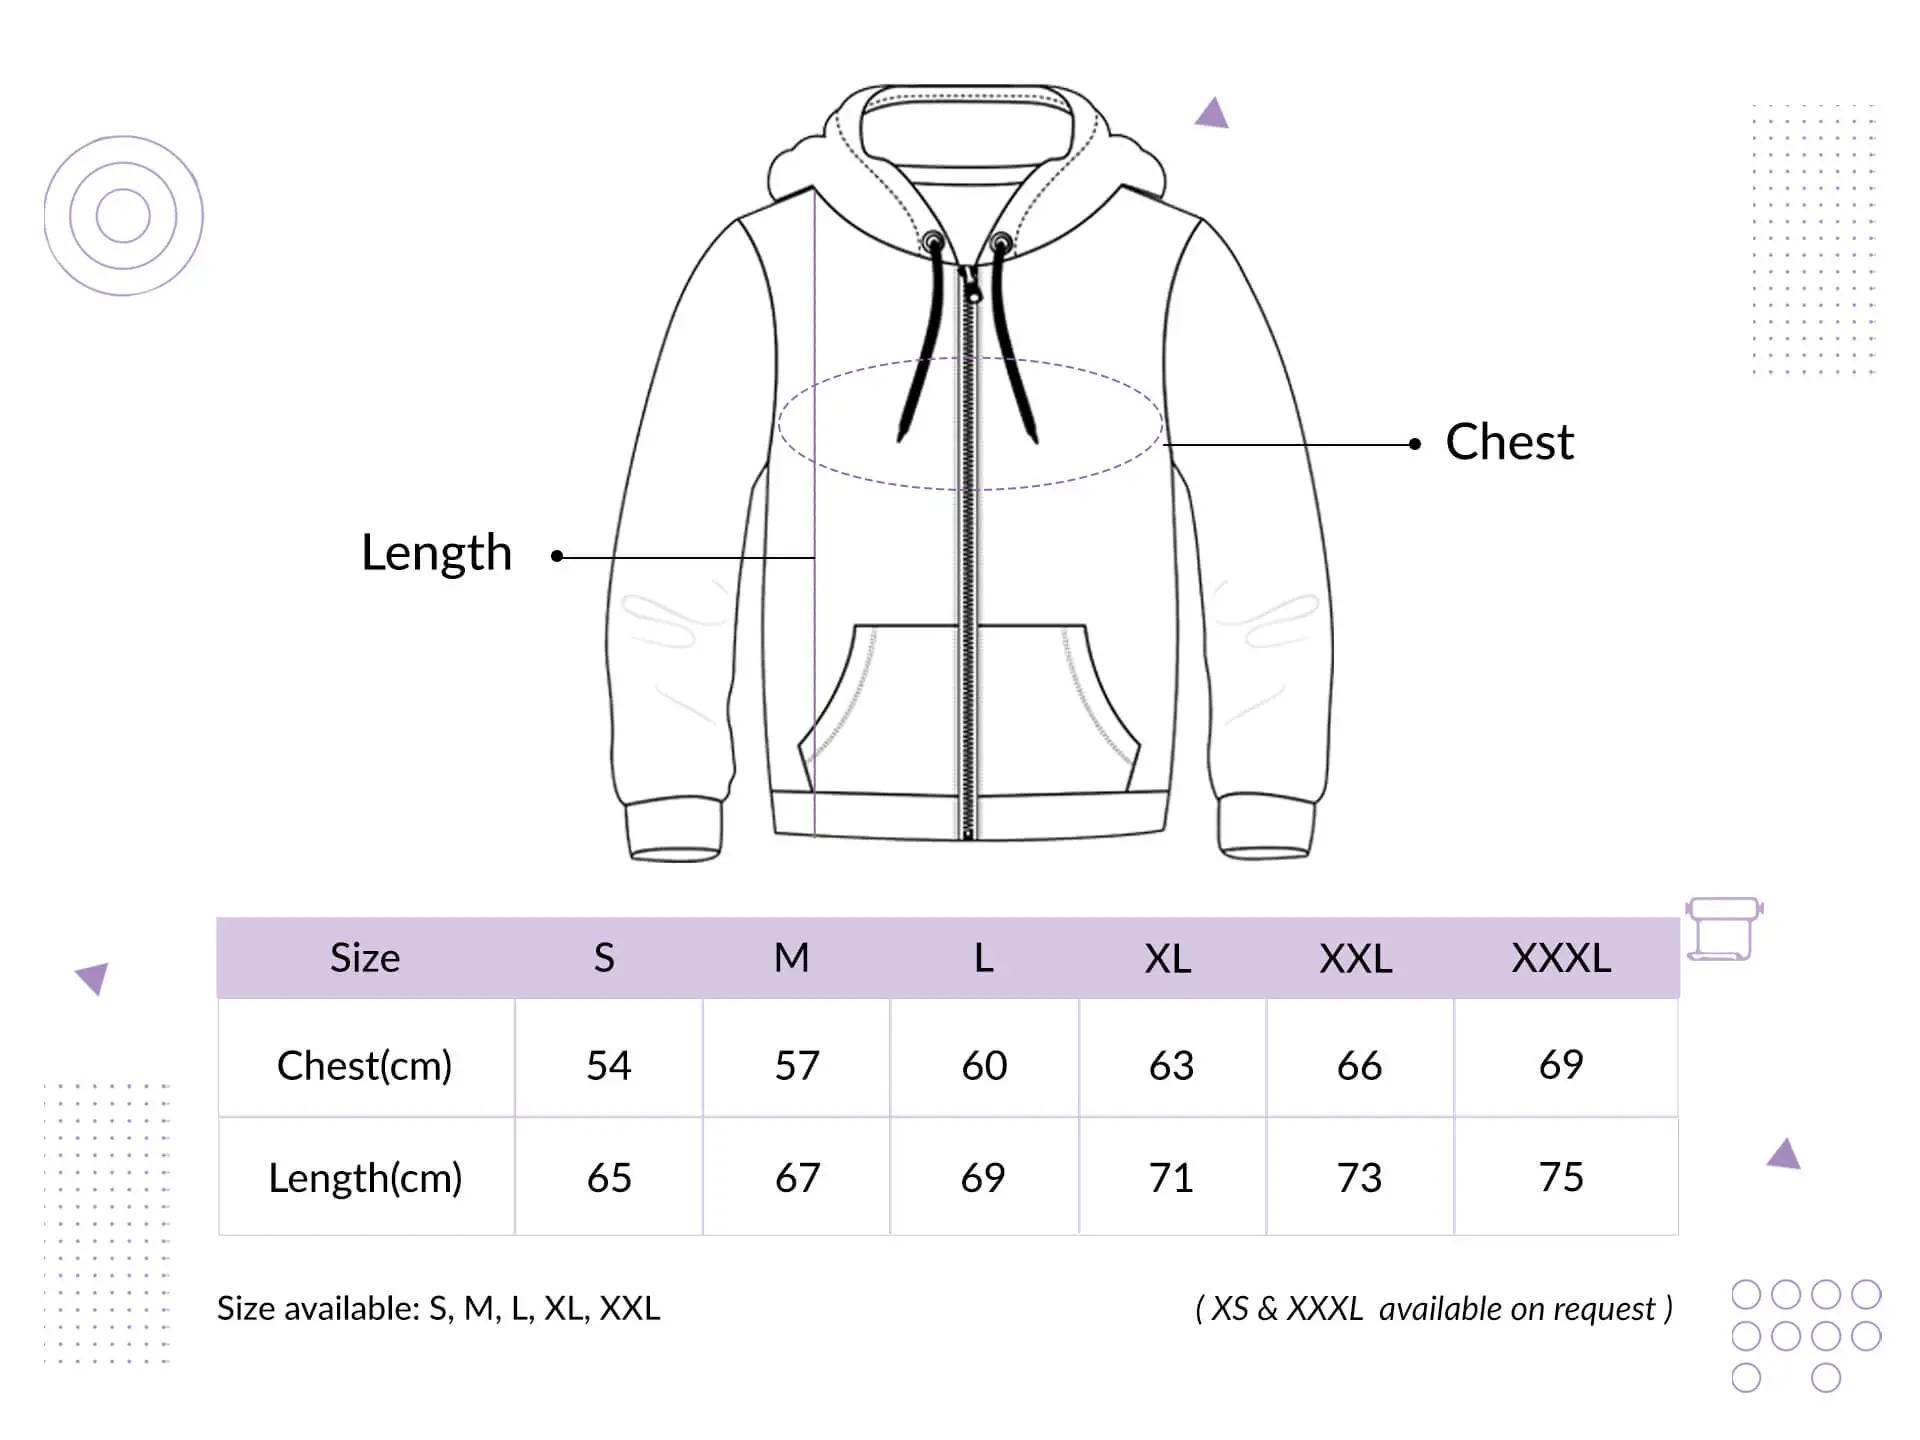 Sweatshirts Size Chart